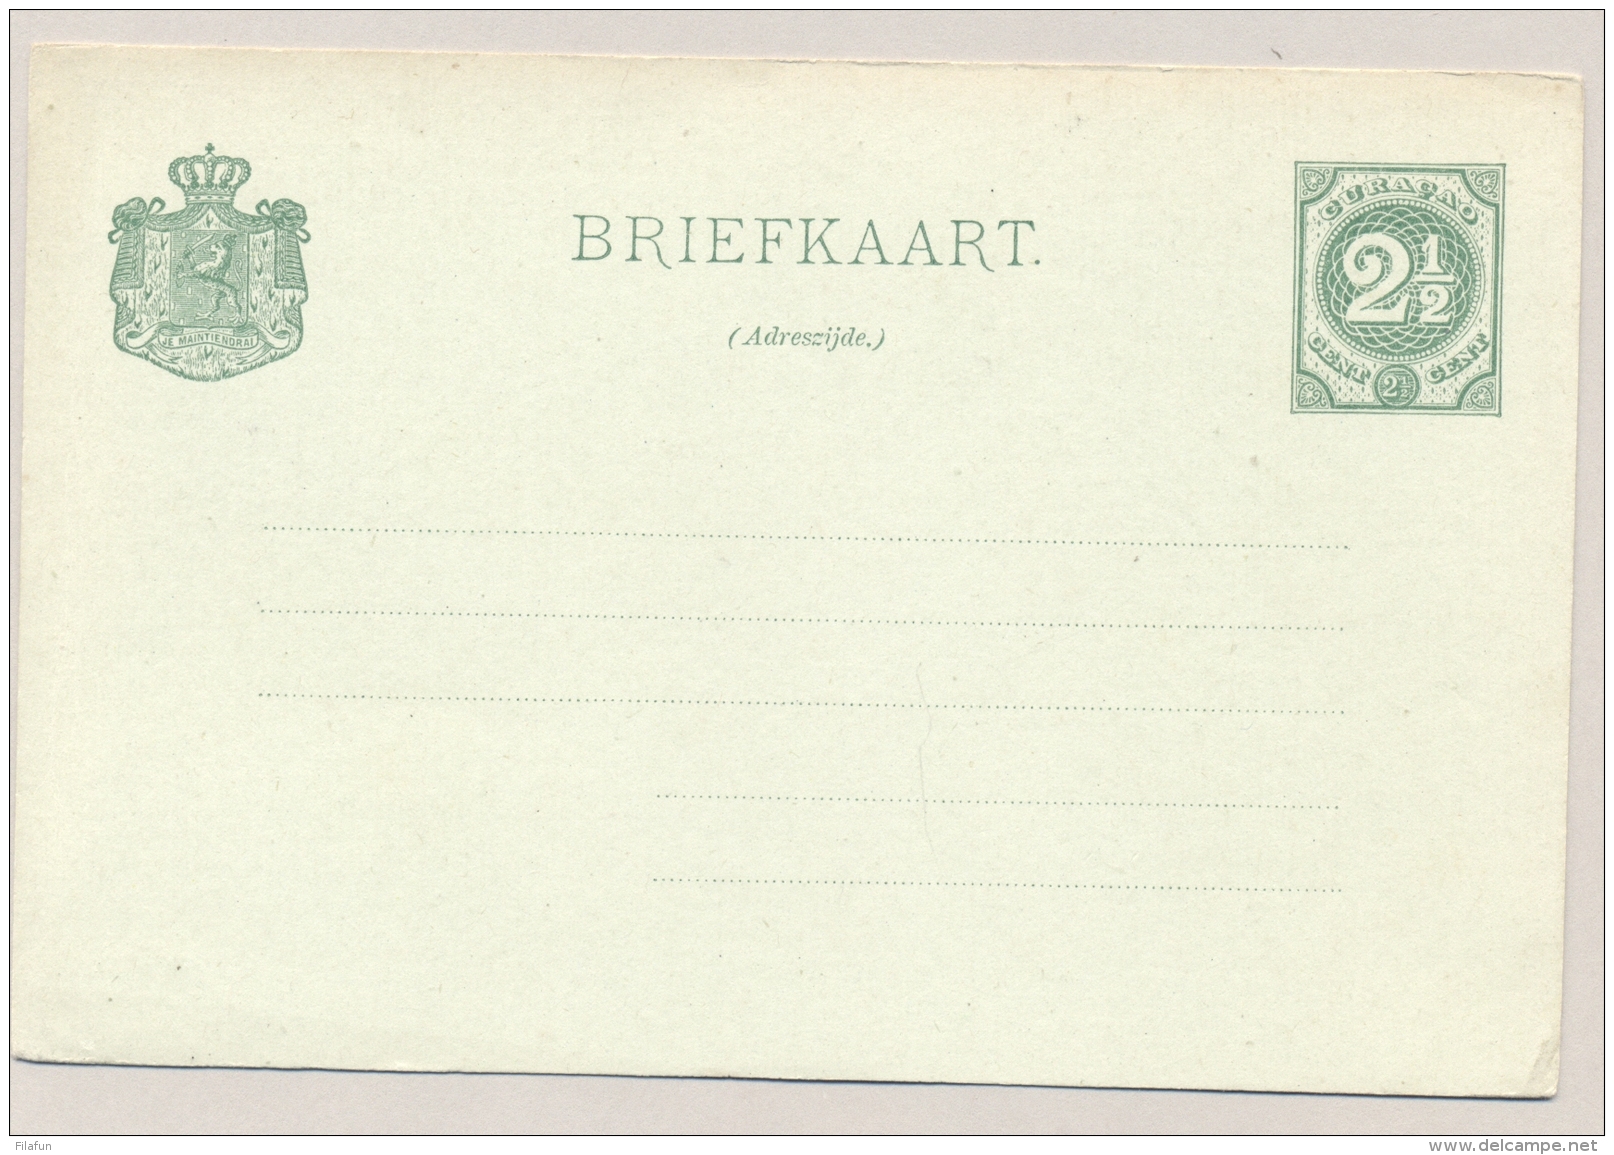 Curacao - 1892 - 2,5 Cent Cijfer, Briefkaart G9 / H&amp;G 9 - Not Used - Curaçao, Nederlandse Antillen, Aruba